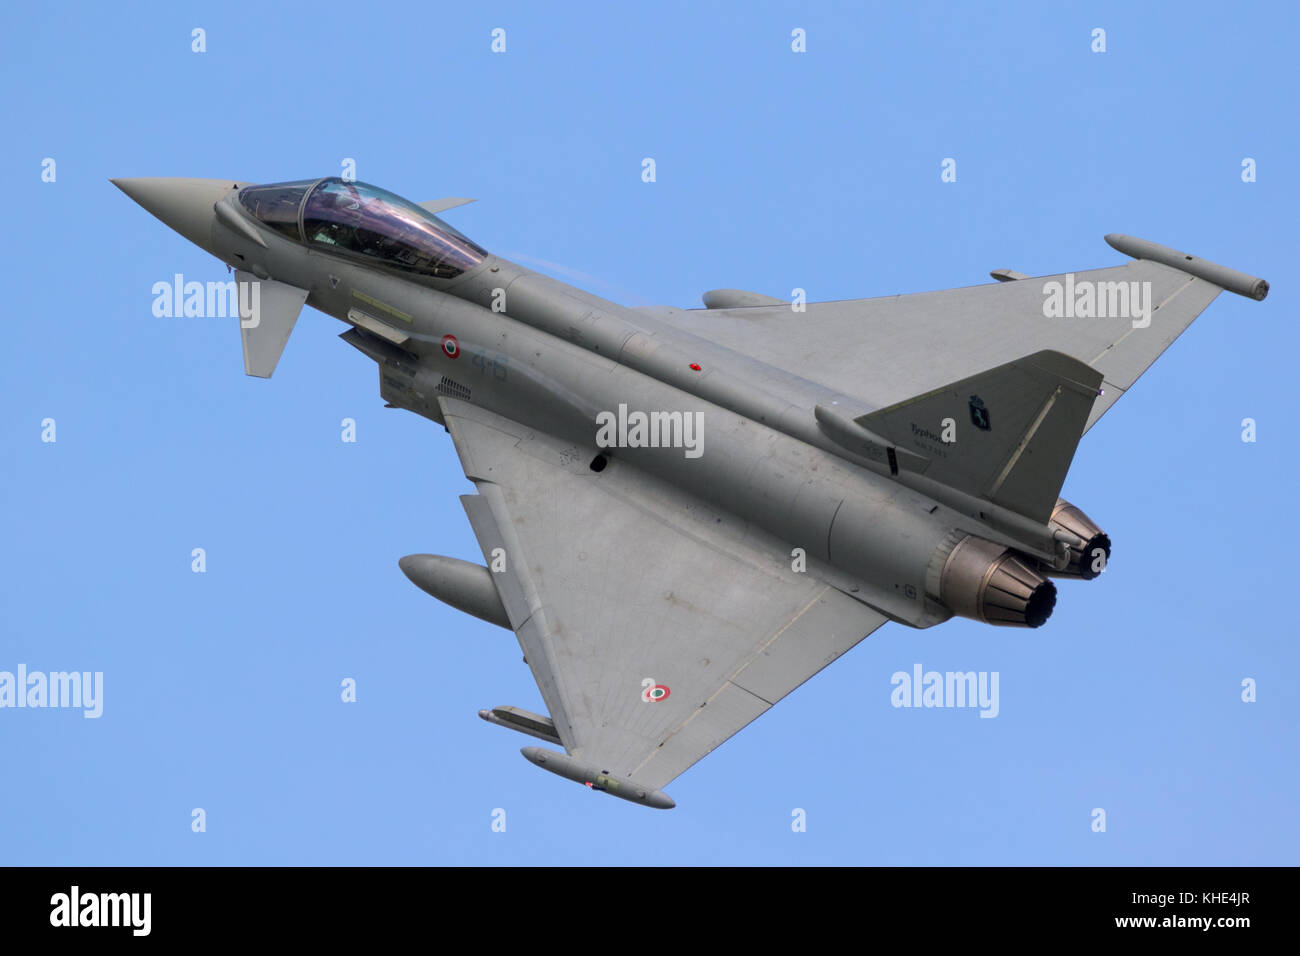 FLORENNES, Belgien - May 15, 2017: italienische Luftwaffe Eurofighter Typhoon Kampfjets Flugzeug im Flug. Stockfoto